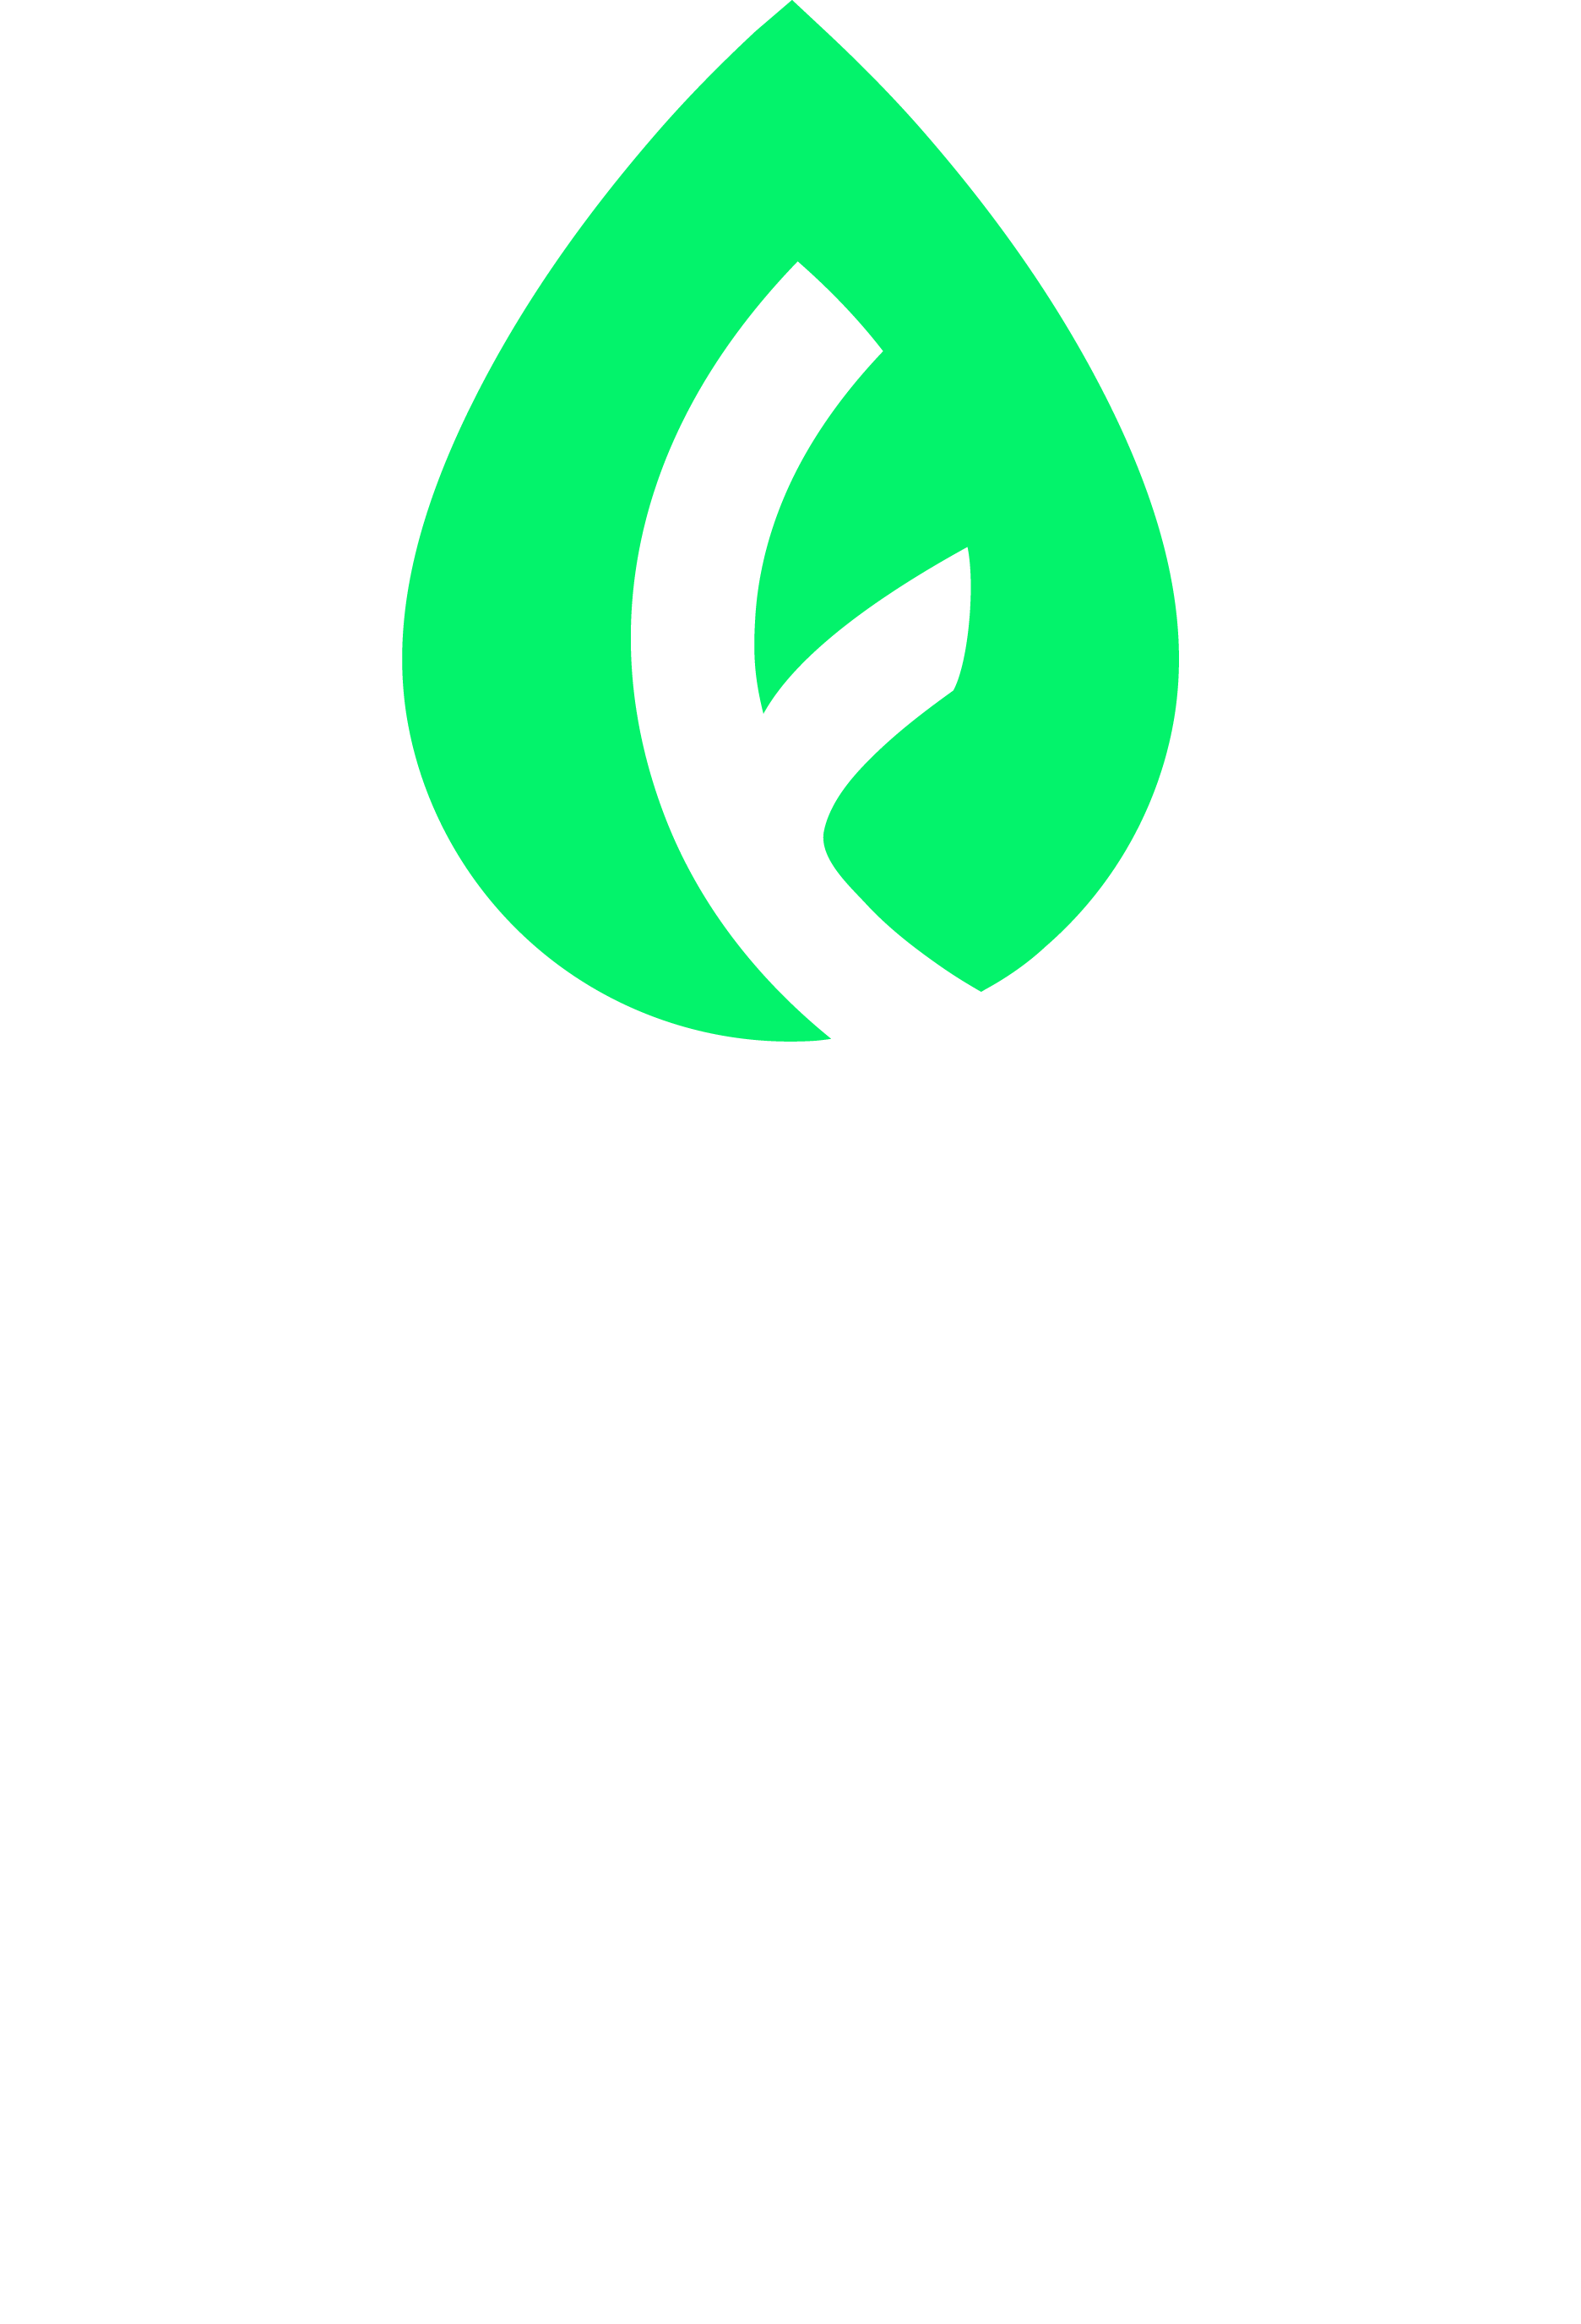 Farmers Finance Australia